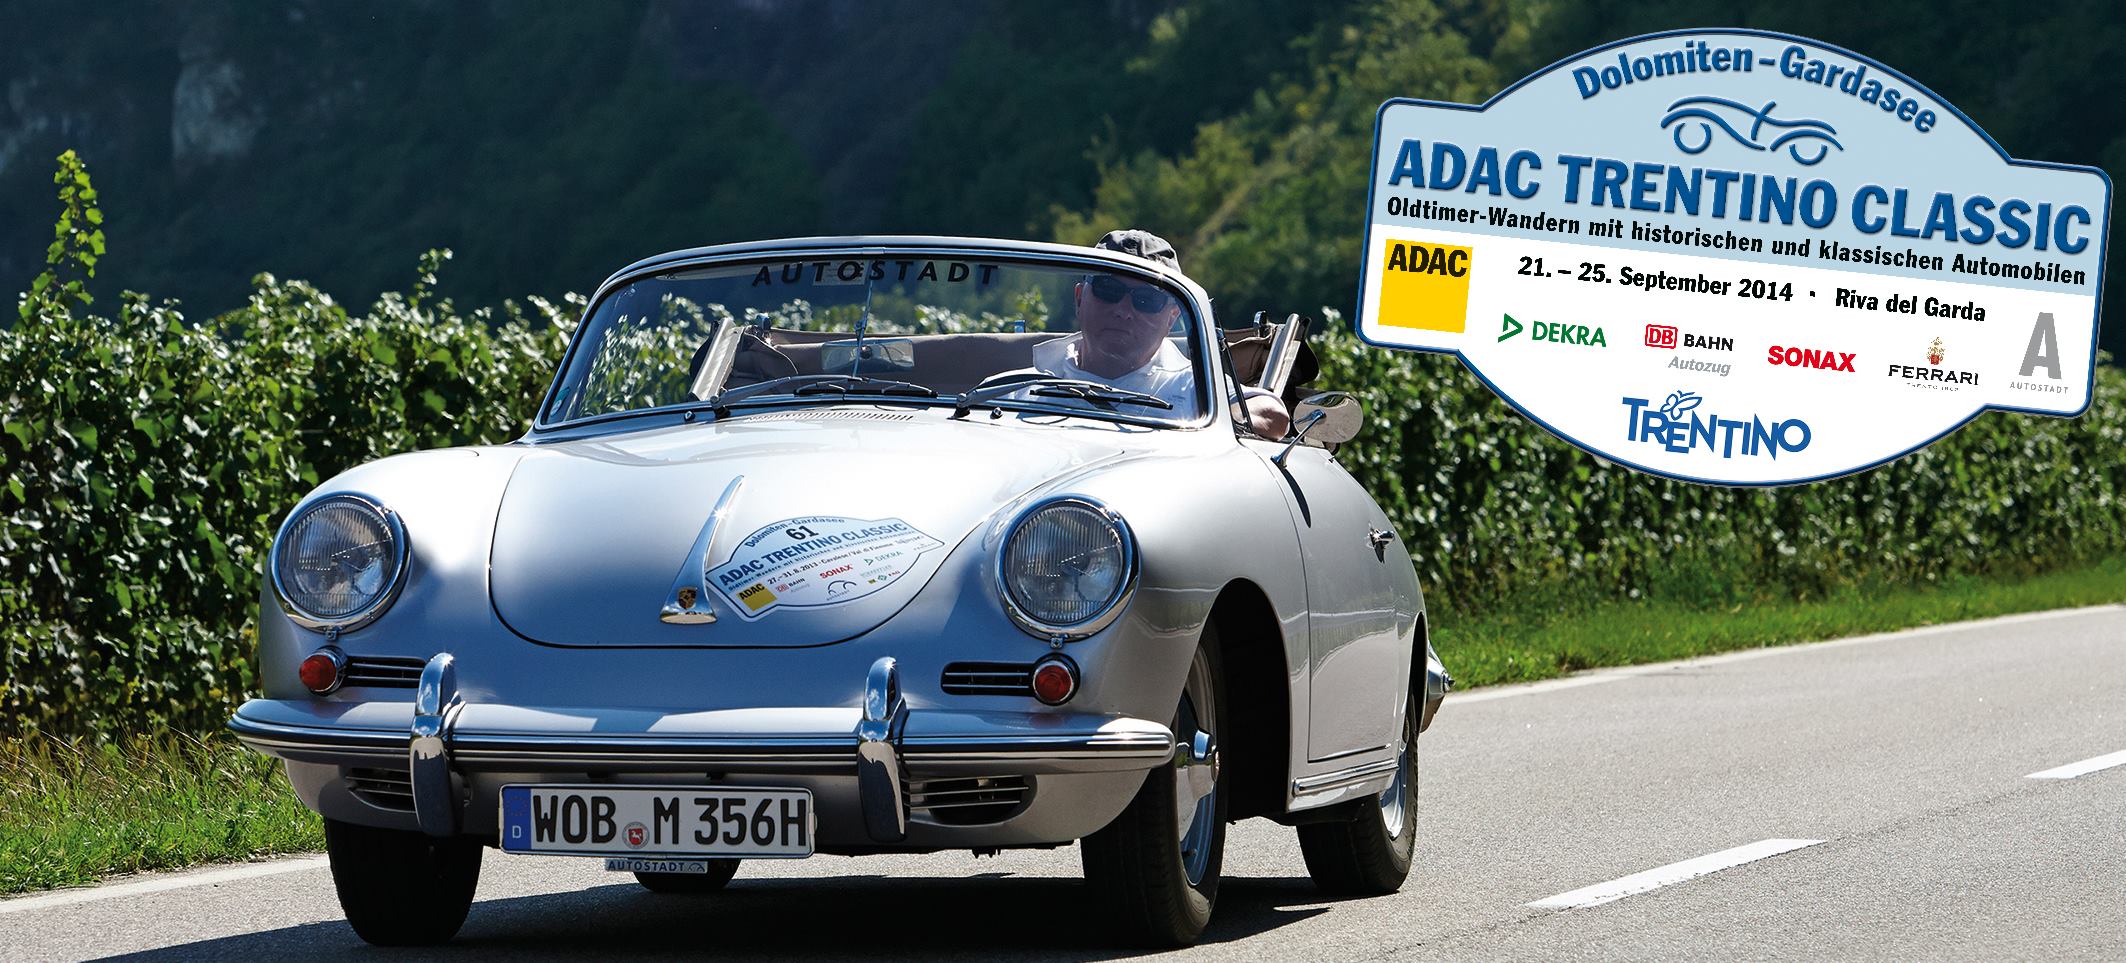 ADAC Trentino Classic 2014